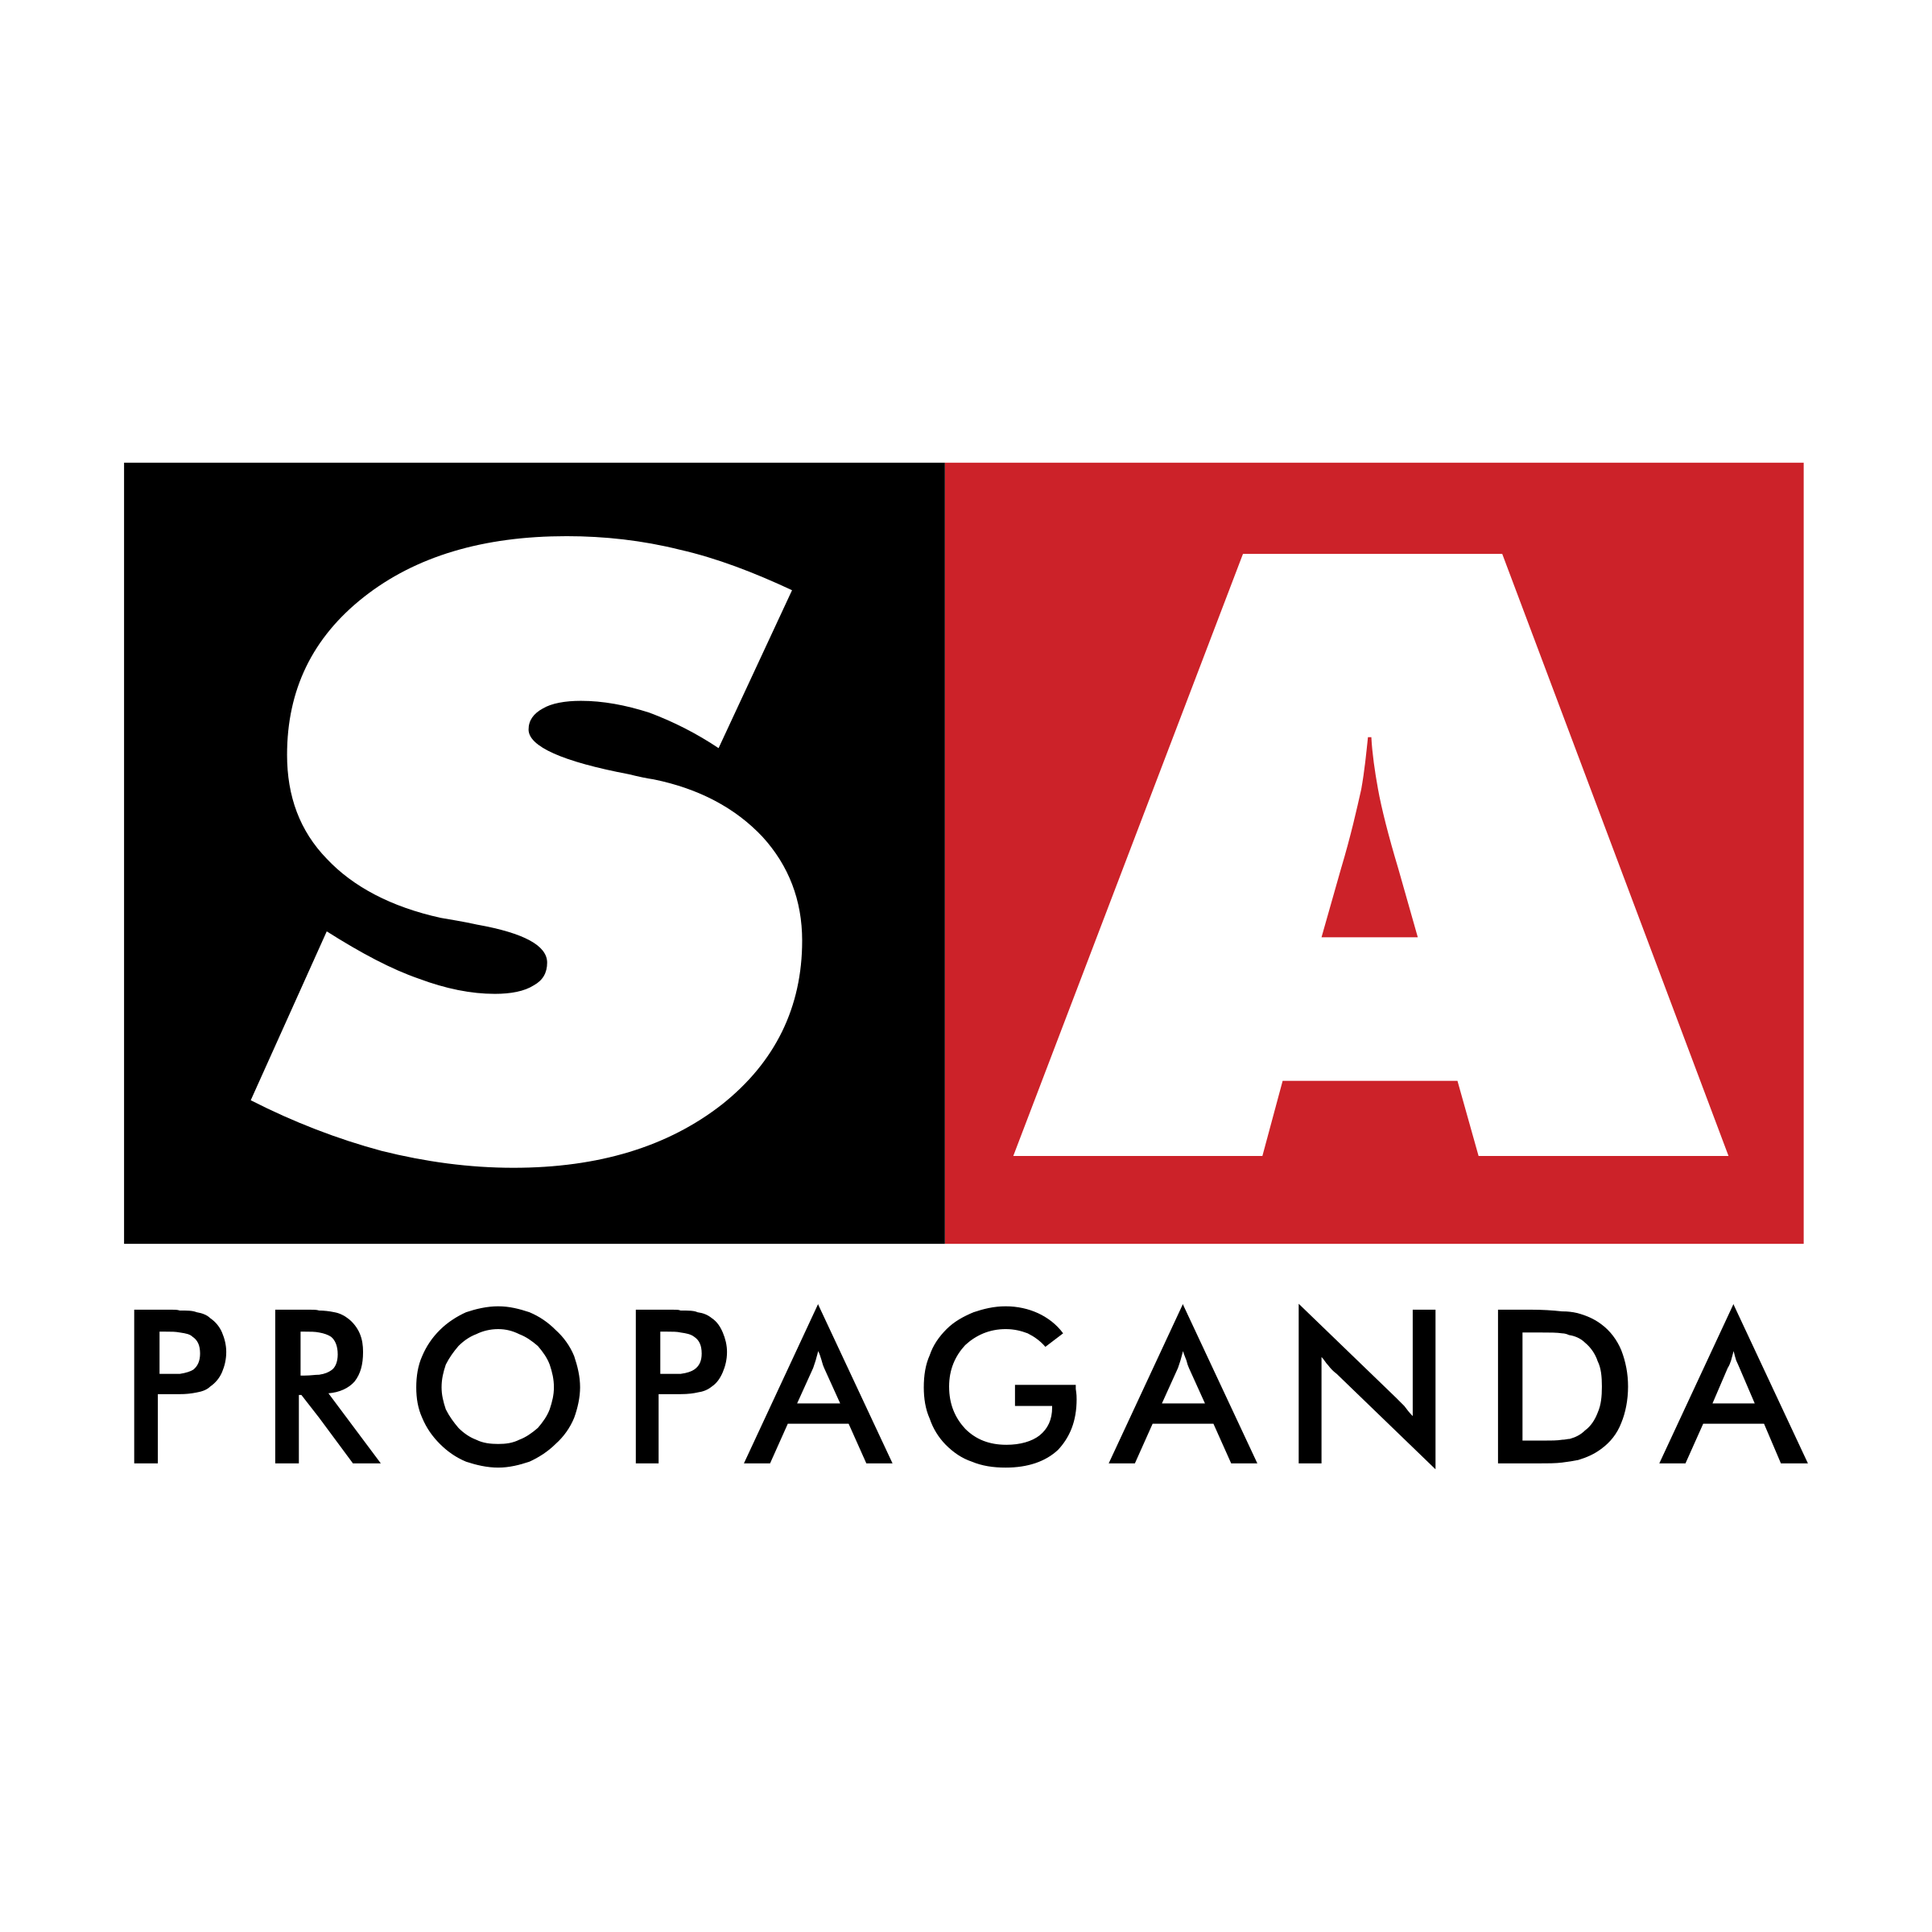 Propaganda Logo - SA Propaganda Logo PNG Transparent & SVG Vector - Freebie Supply